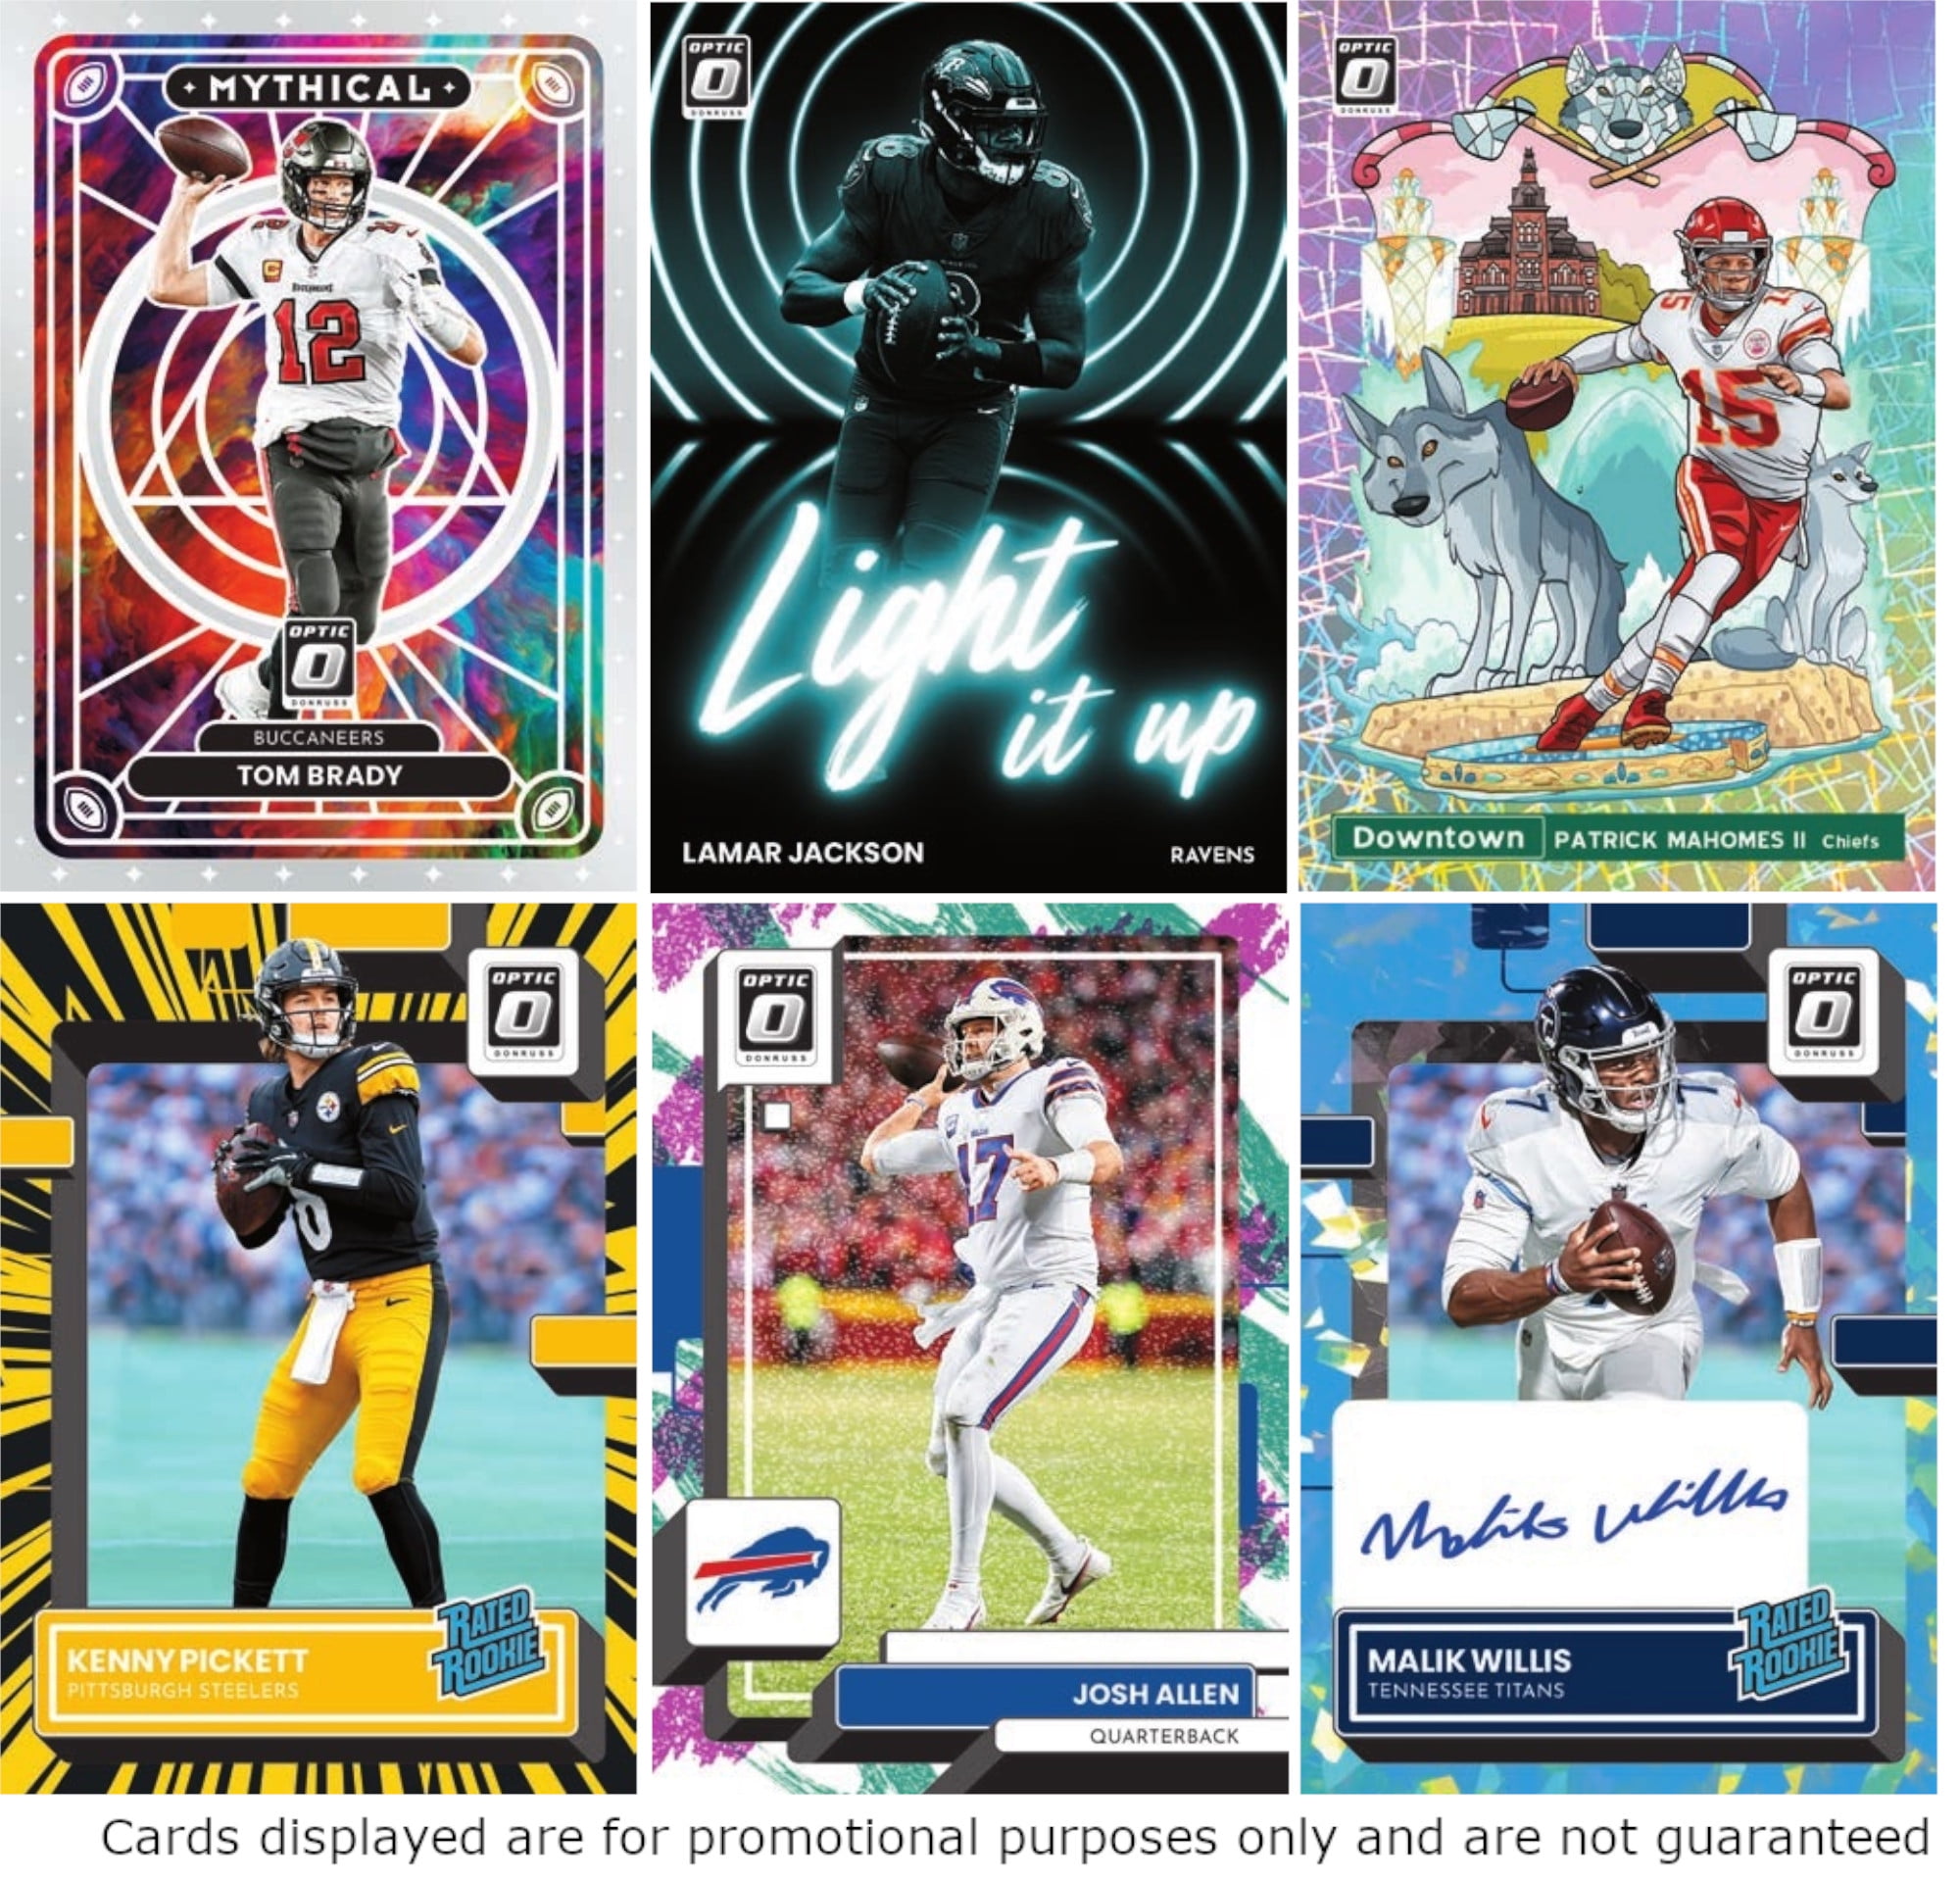 2022 Panini Donruss Optic NFL Football Trading Cards Blaster Box